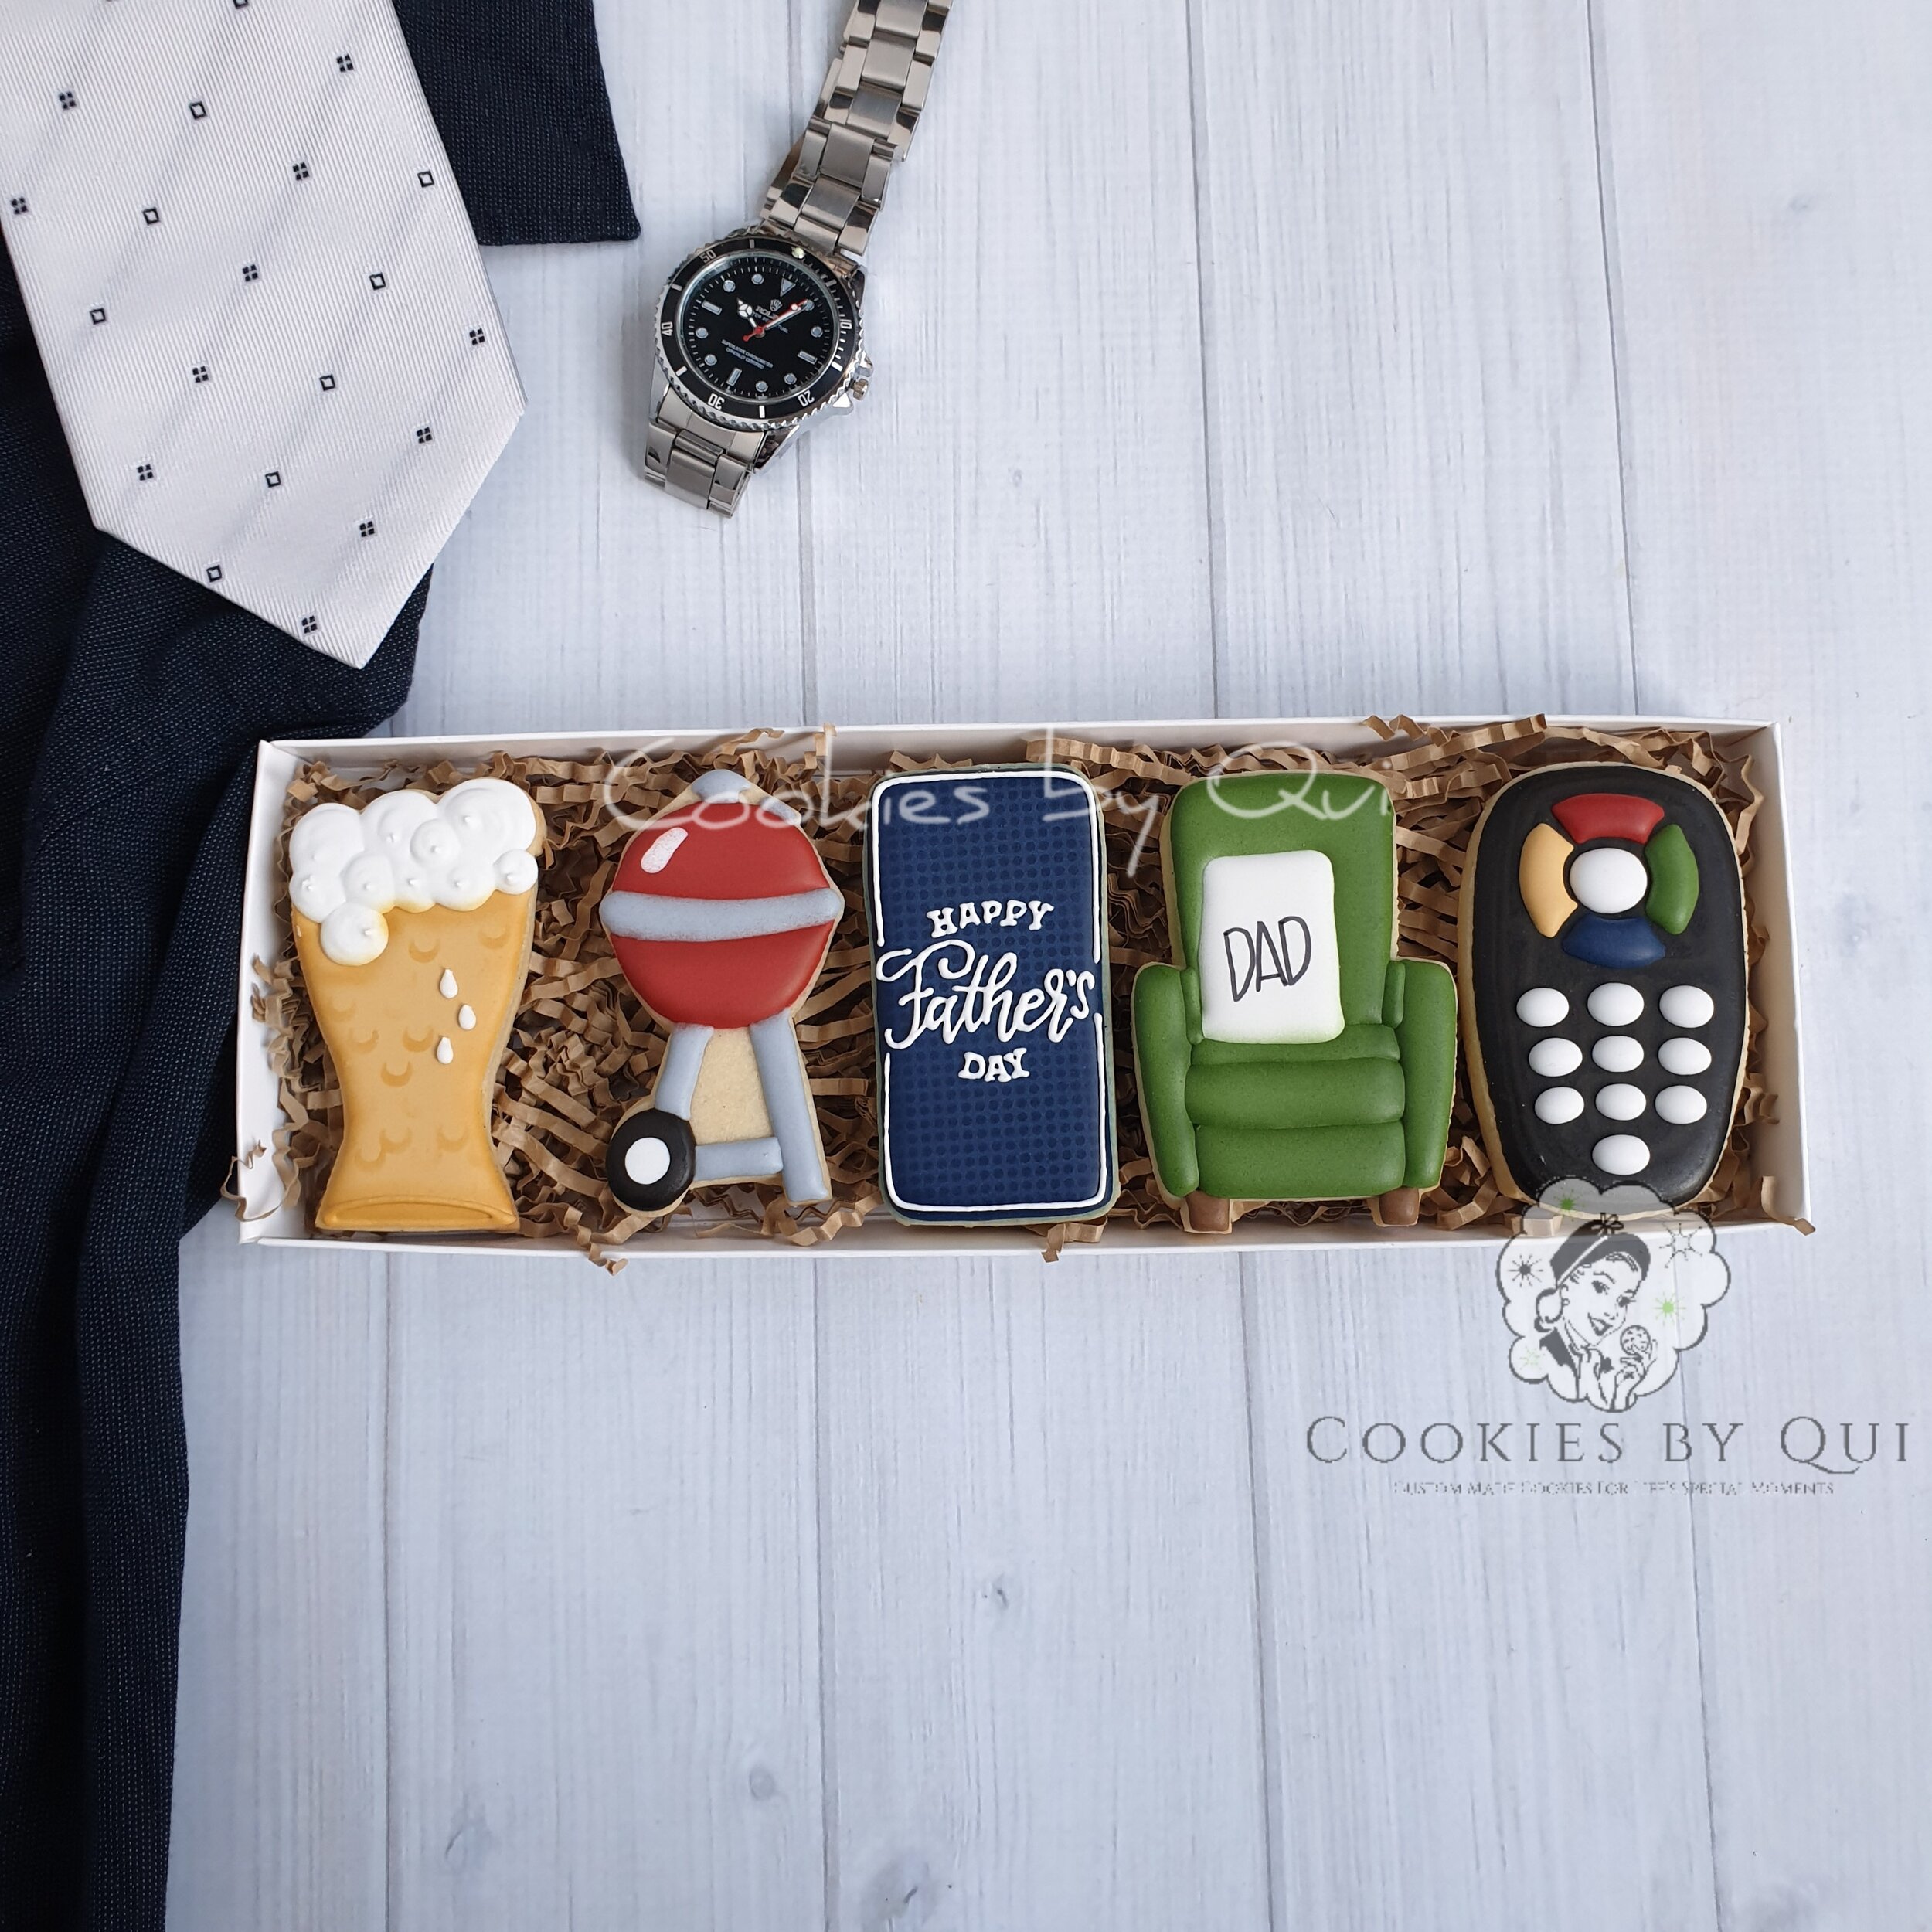 Dad's Favourite Things - Cookies by Qui Geelong.jpg